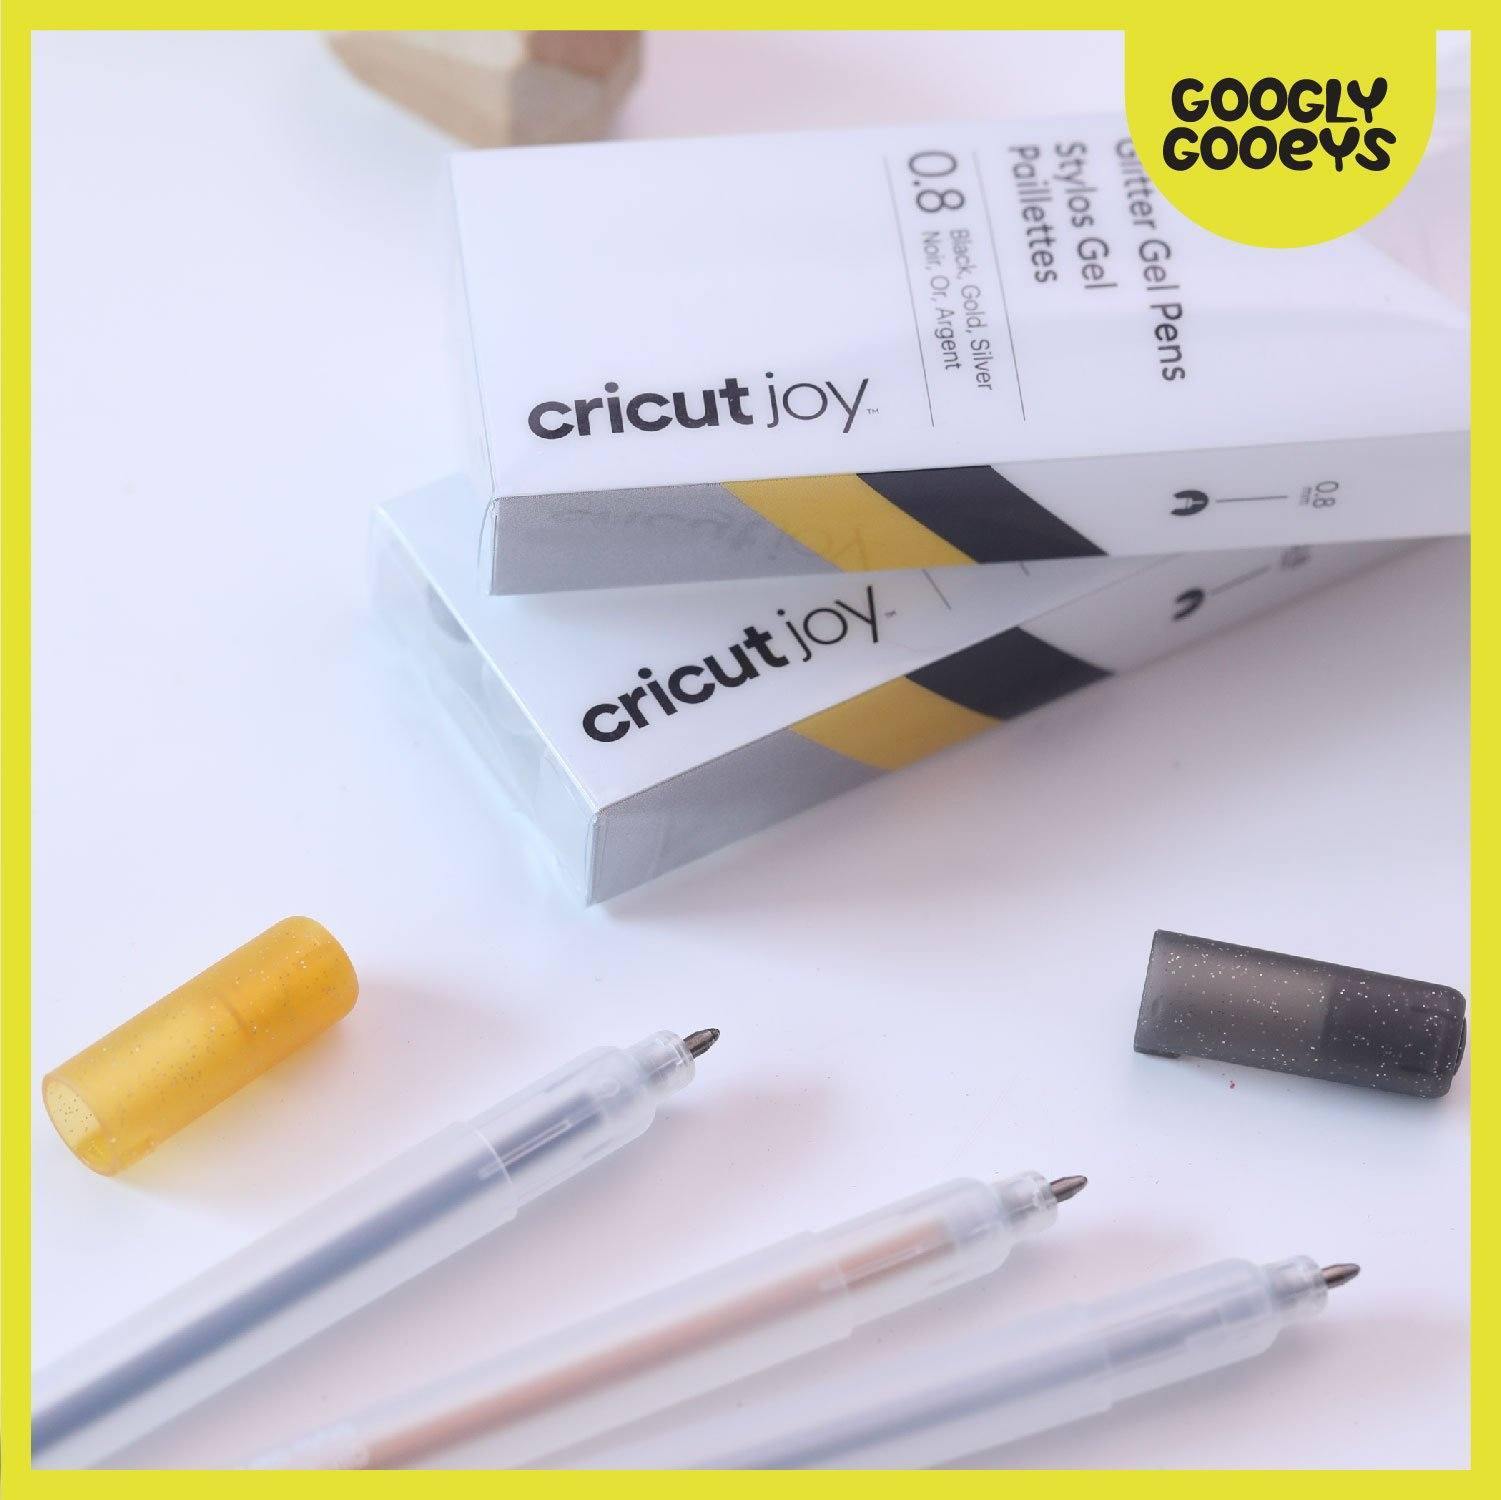 Cricut Joy Glitter Gel Pens, 0.8 mm (3 ct) | Black, Gold, Silver-Cricut Joy Accessories-[Product vendor]-GooglyGooeys-DIY-Crafts-Philippines